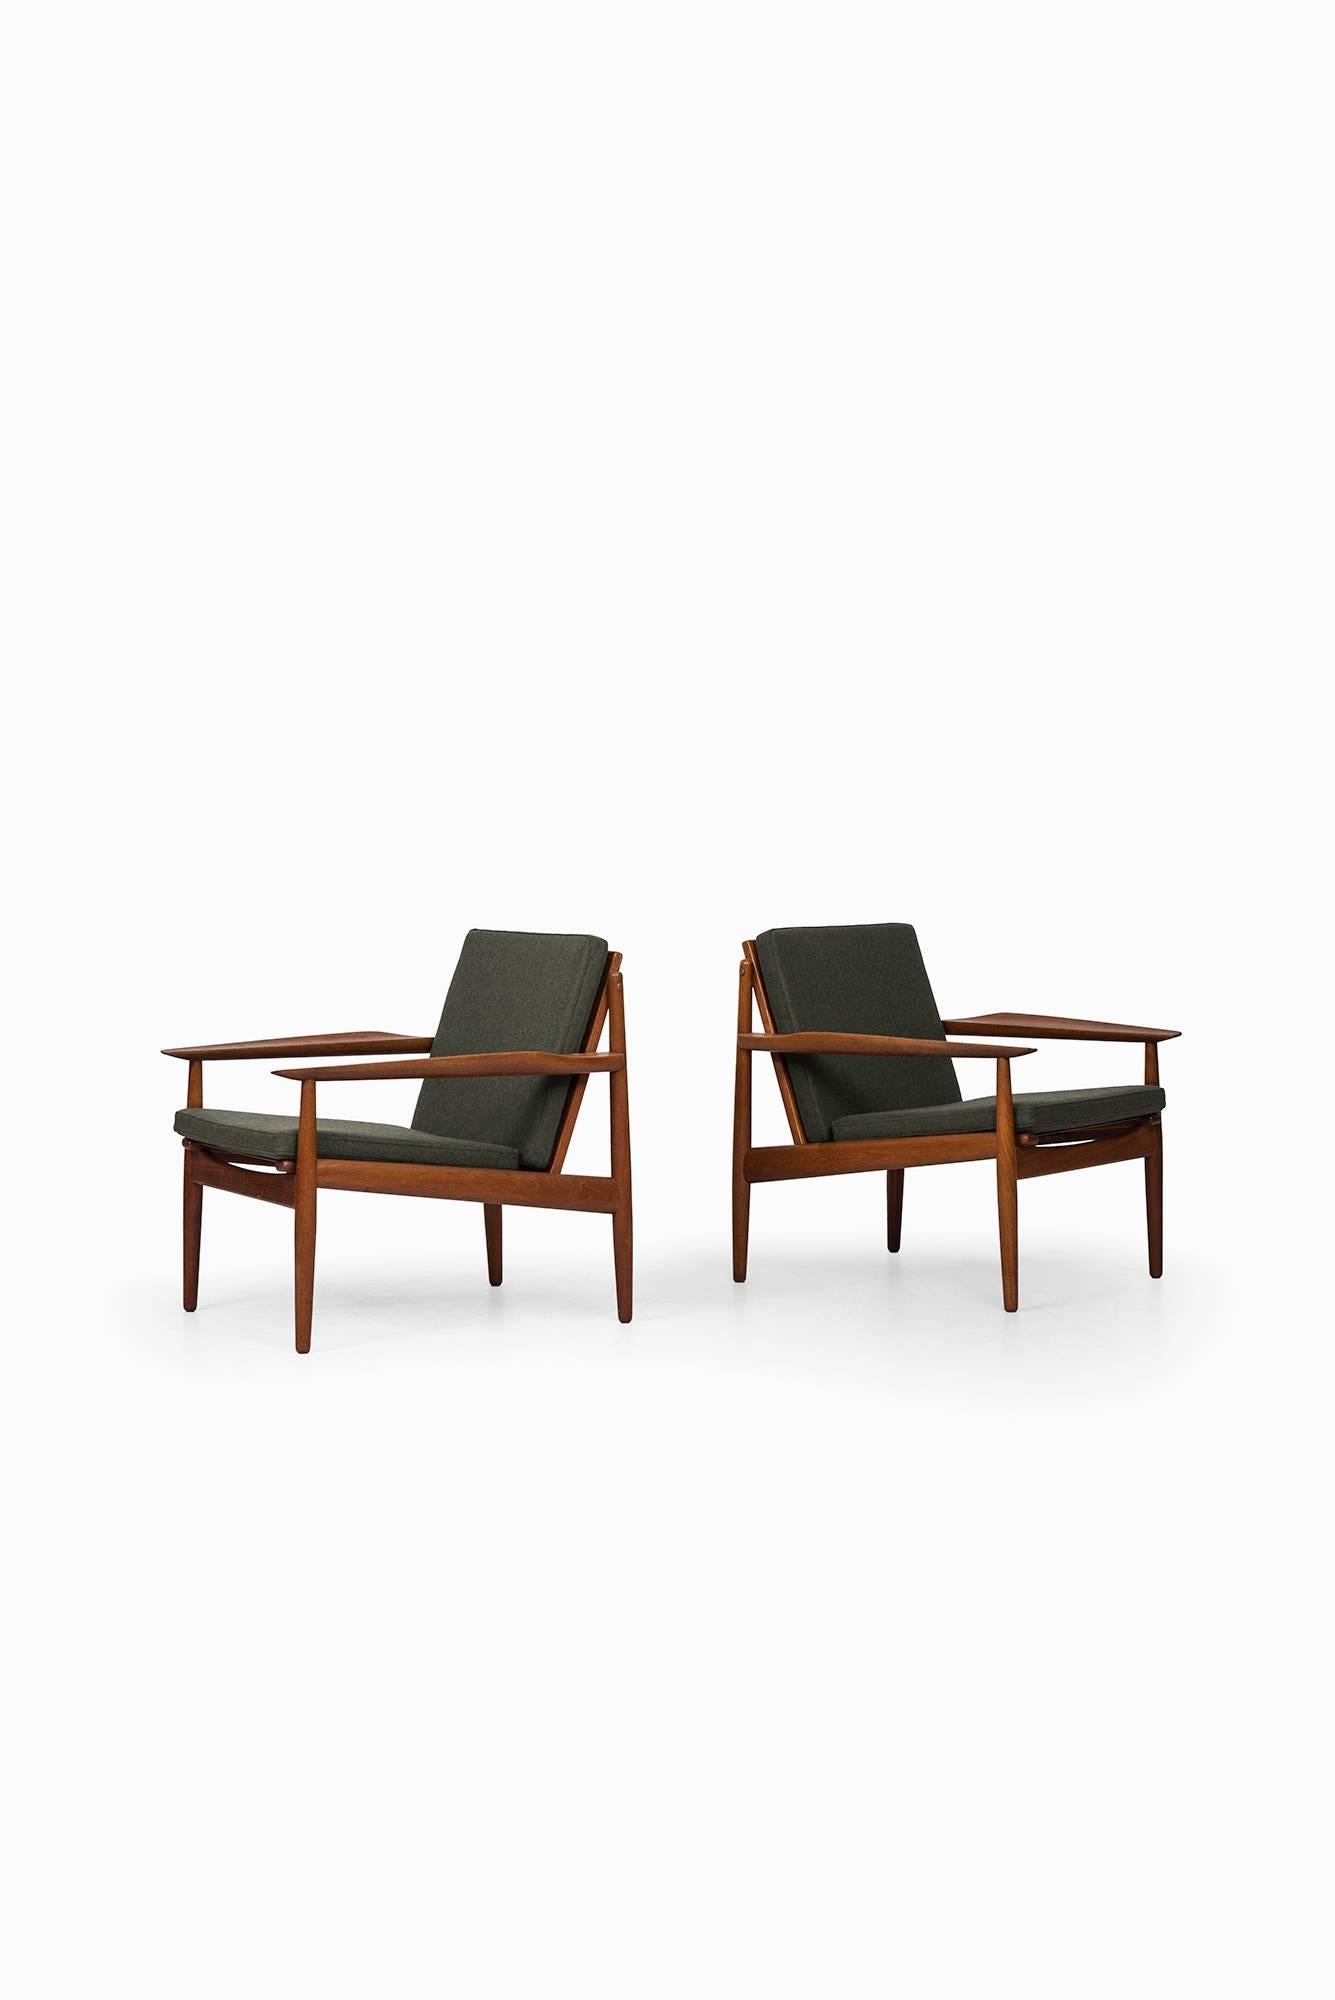 Mid-20th Century Arne Vodder Easy Chairs Produced by Glostrup Møbelfabrik in Denmark